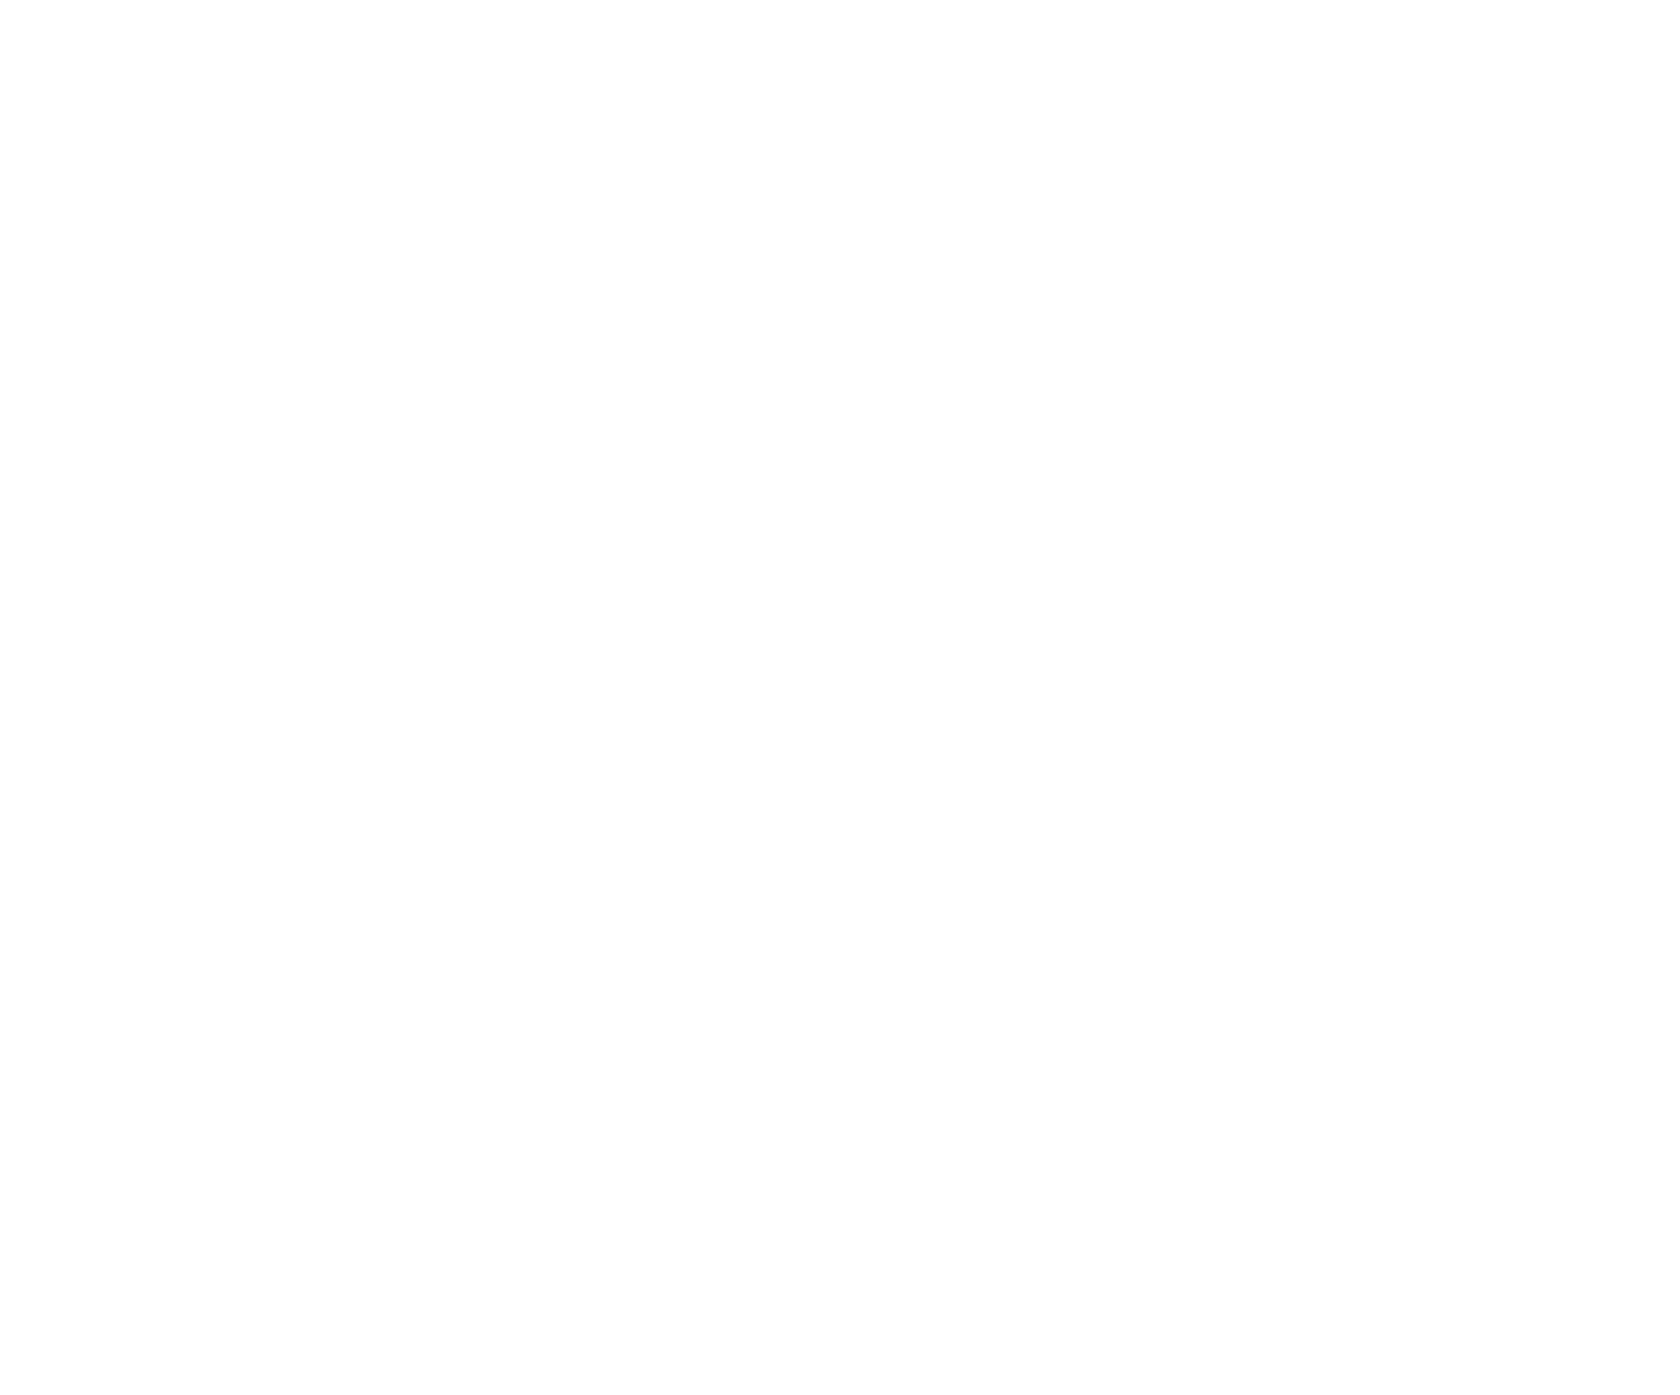 Лот №8: Картина «К святой Матроне Московской». Холст, темпера, размер 51х61 см (автор: Комарова Е.). Начальная цена: 23 000 руб.